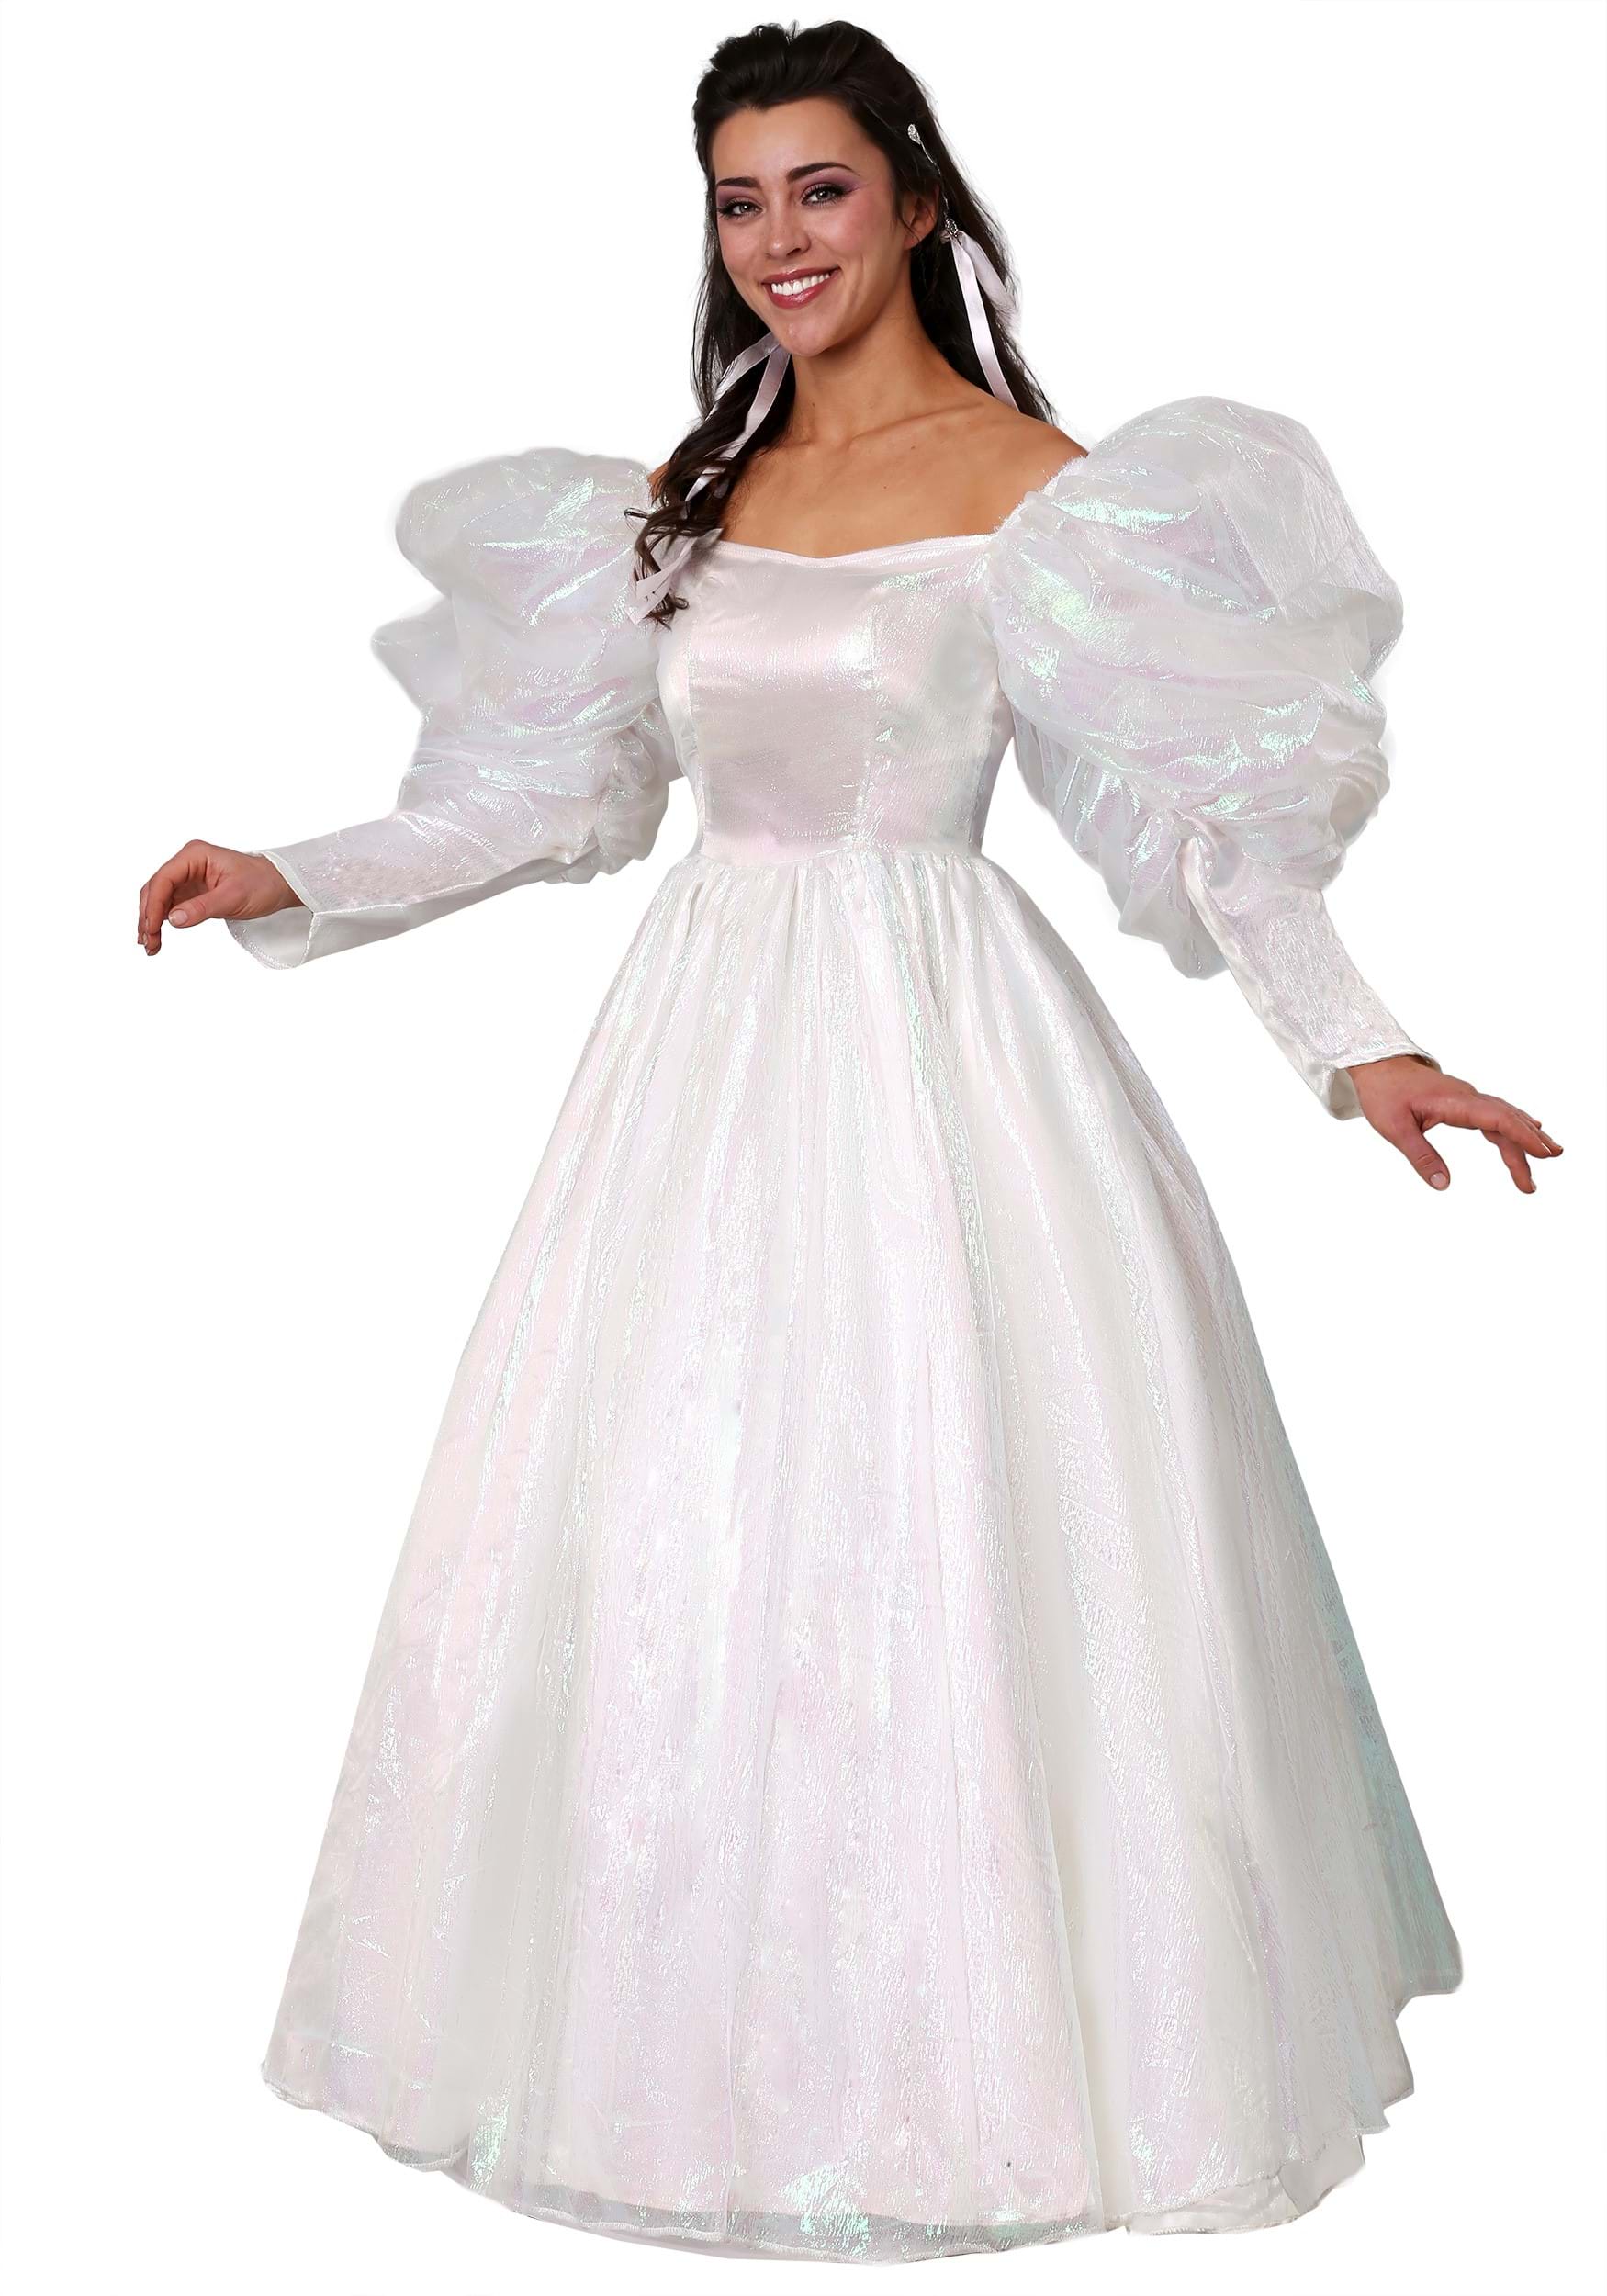 Photos - Fancy Dress FUN Costumes Sarah Labyrinth Adult Costume White FUN0297AD